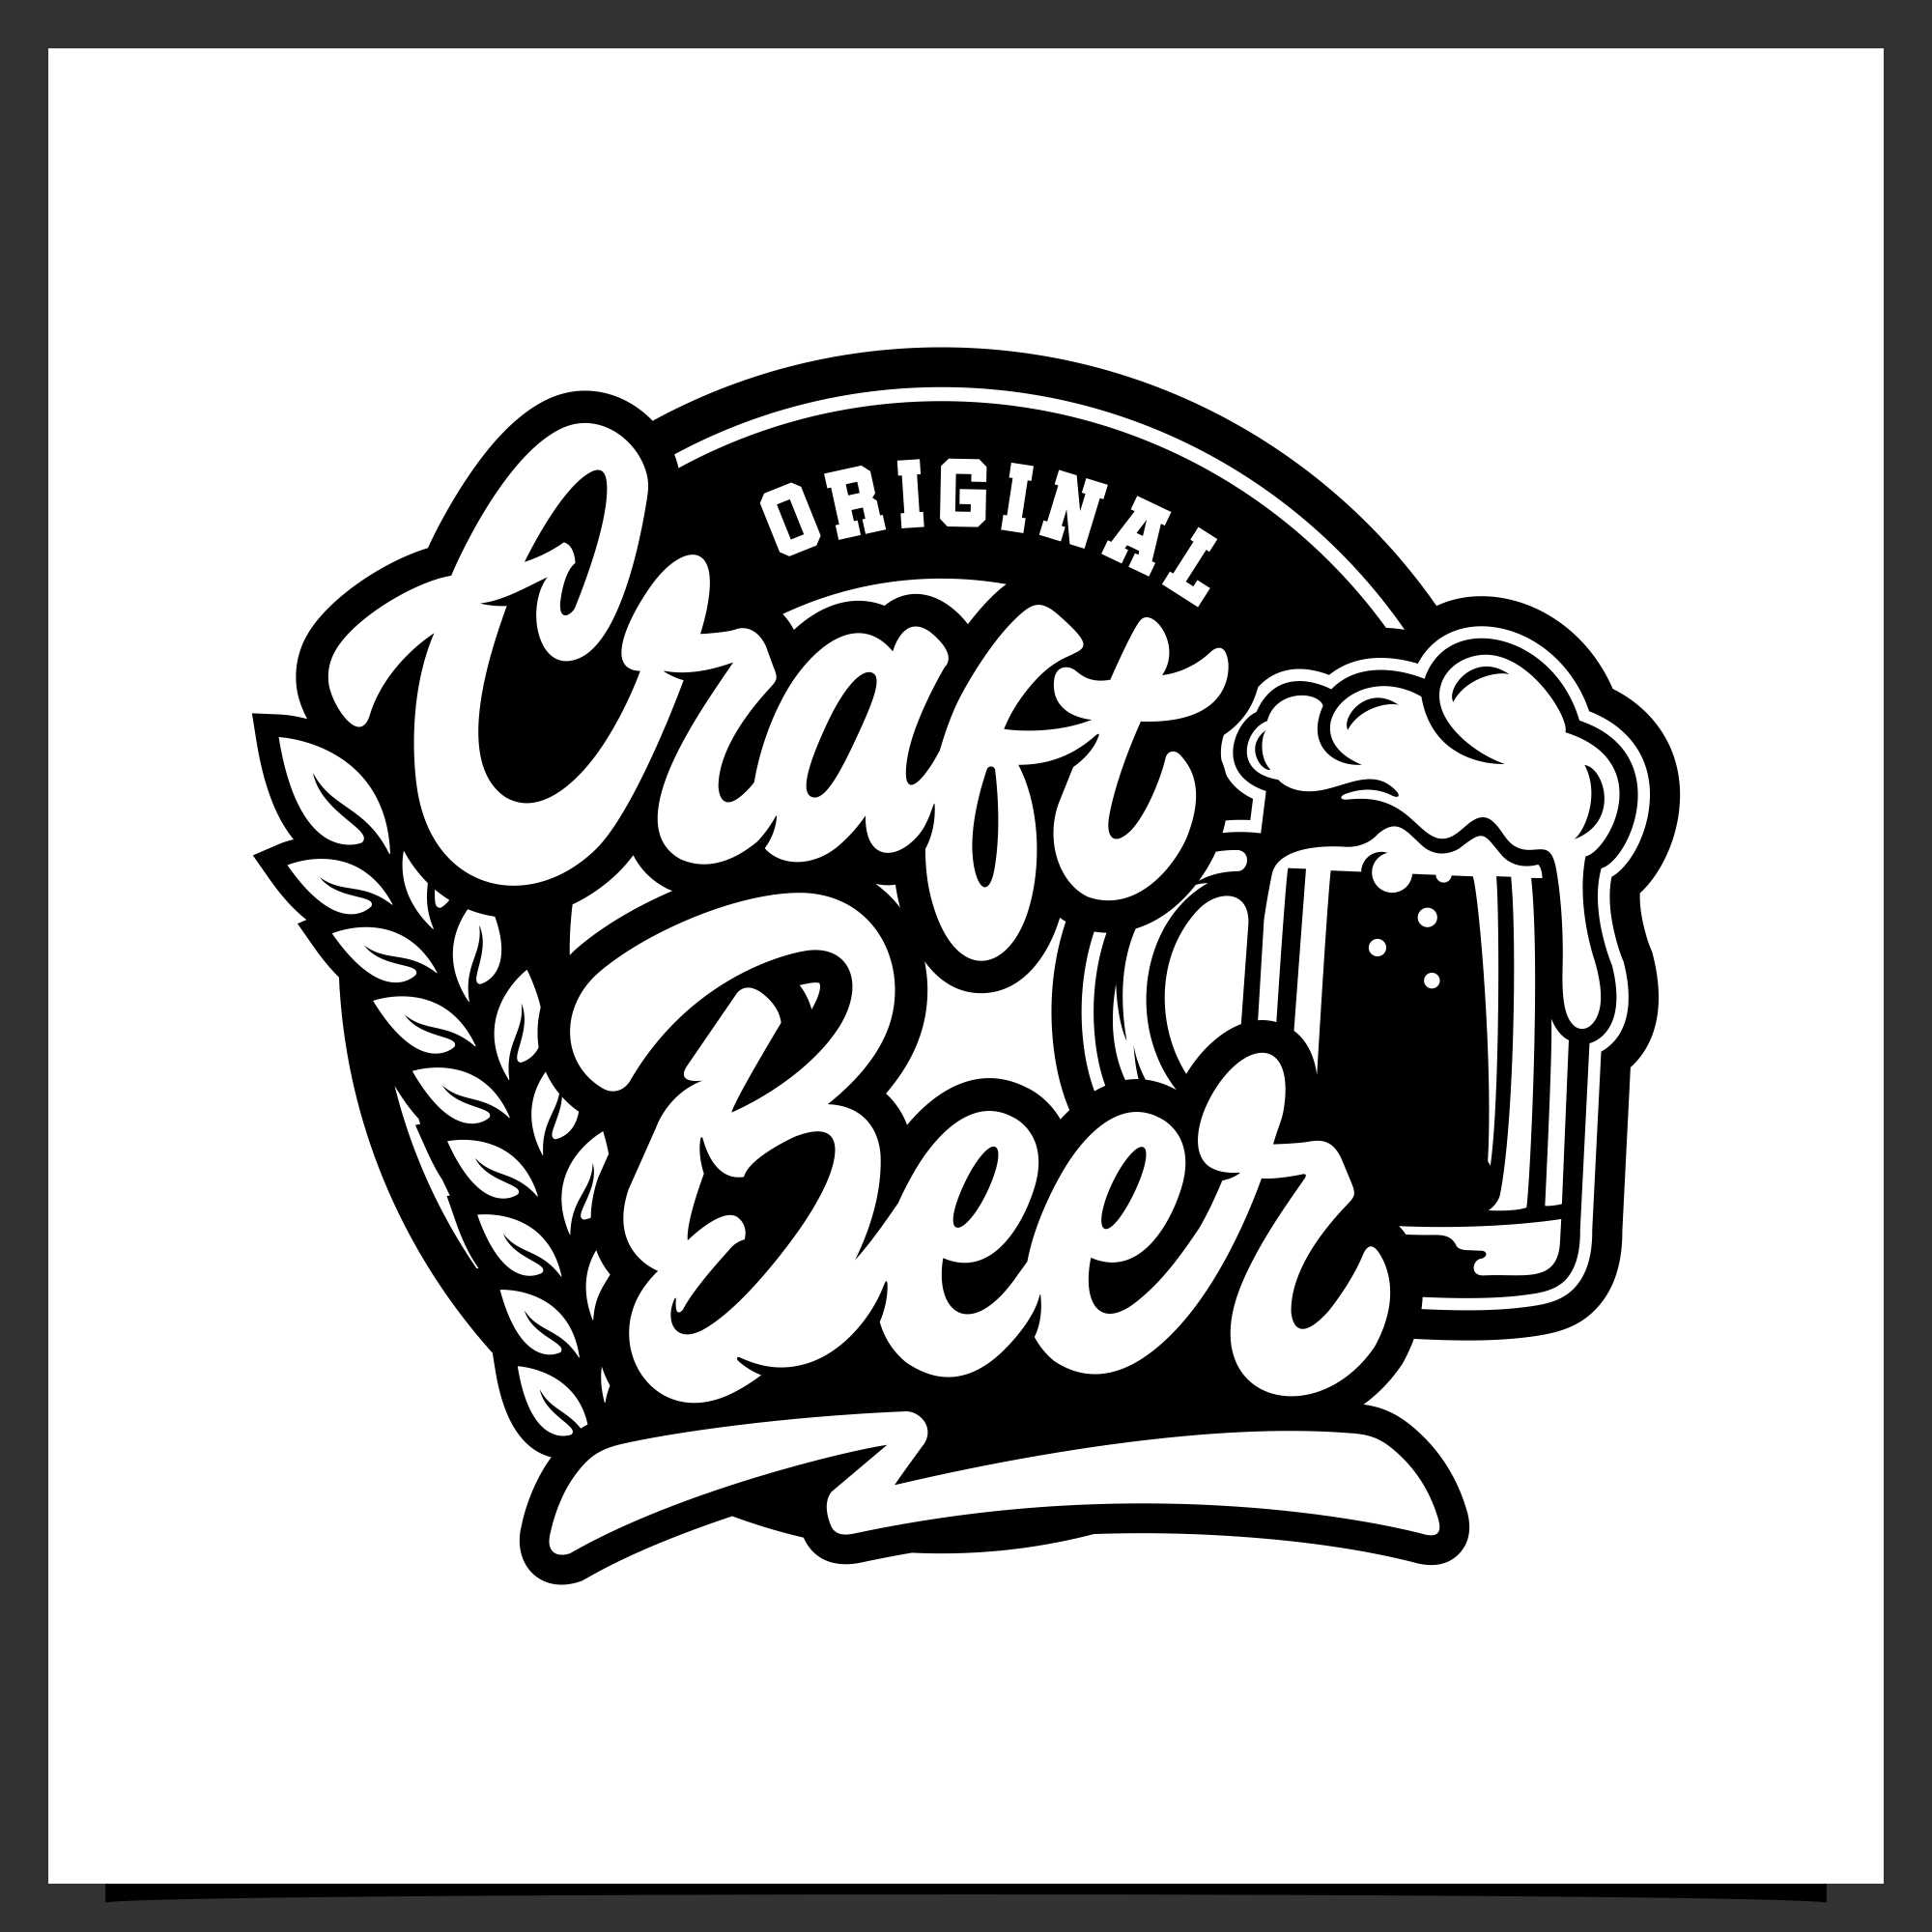 Craft Beer Original logo design - $4 preview image.